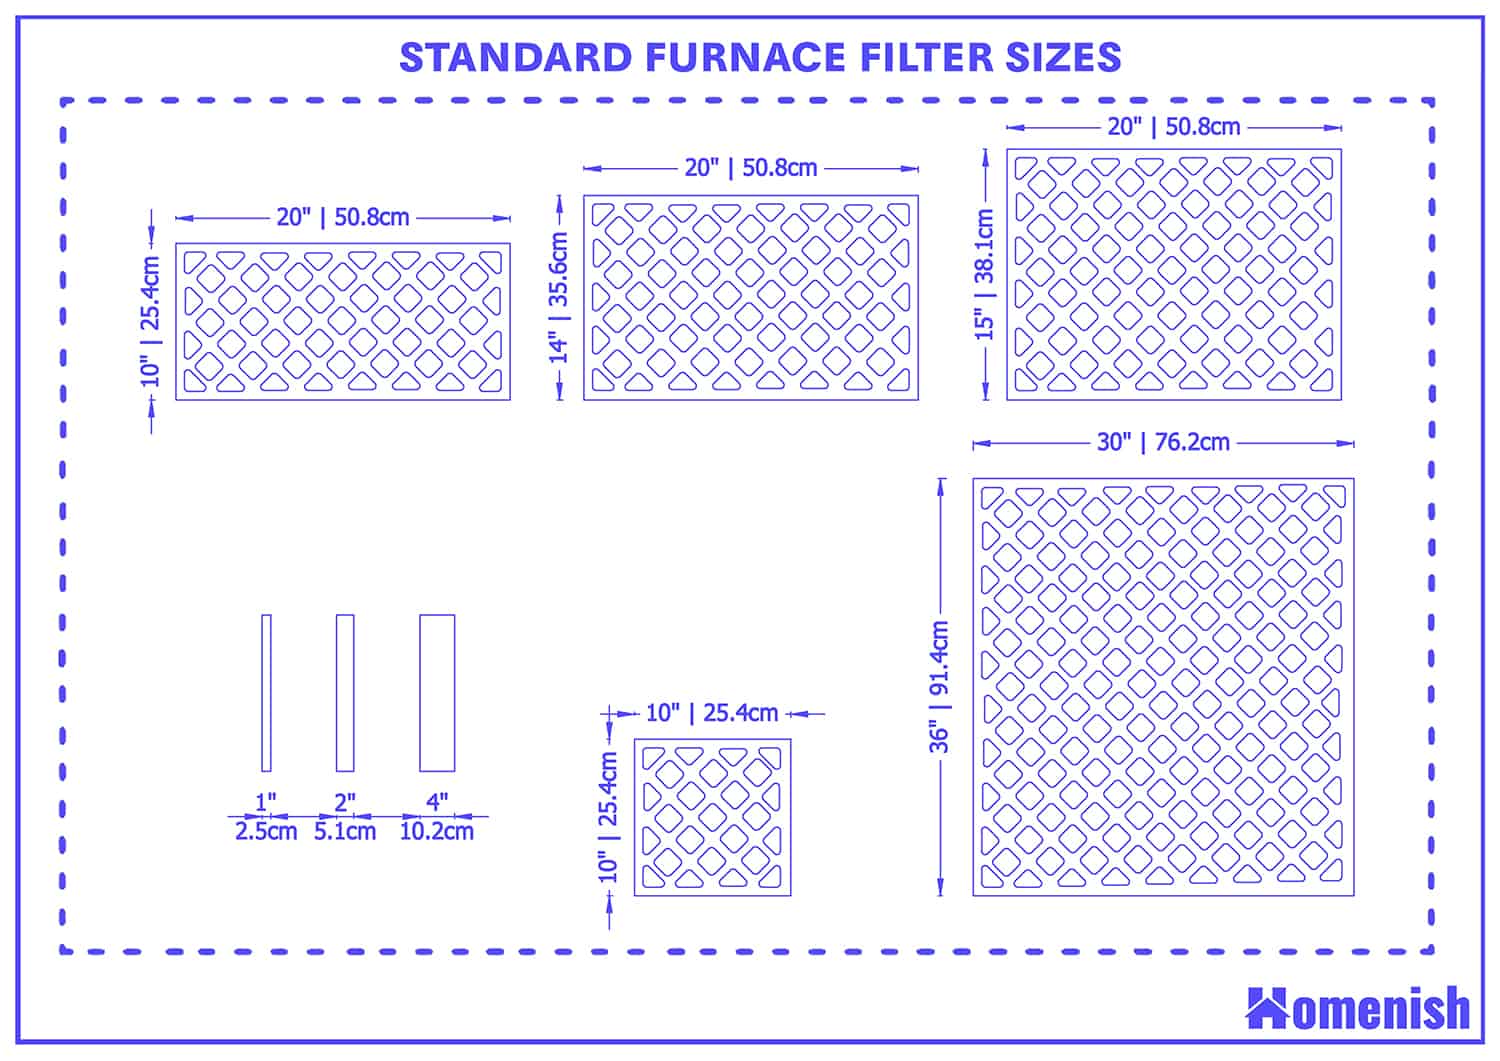 Standard furnace filter sizes